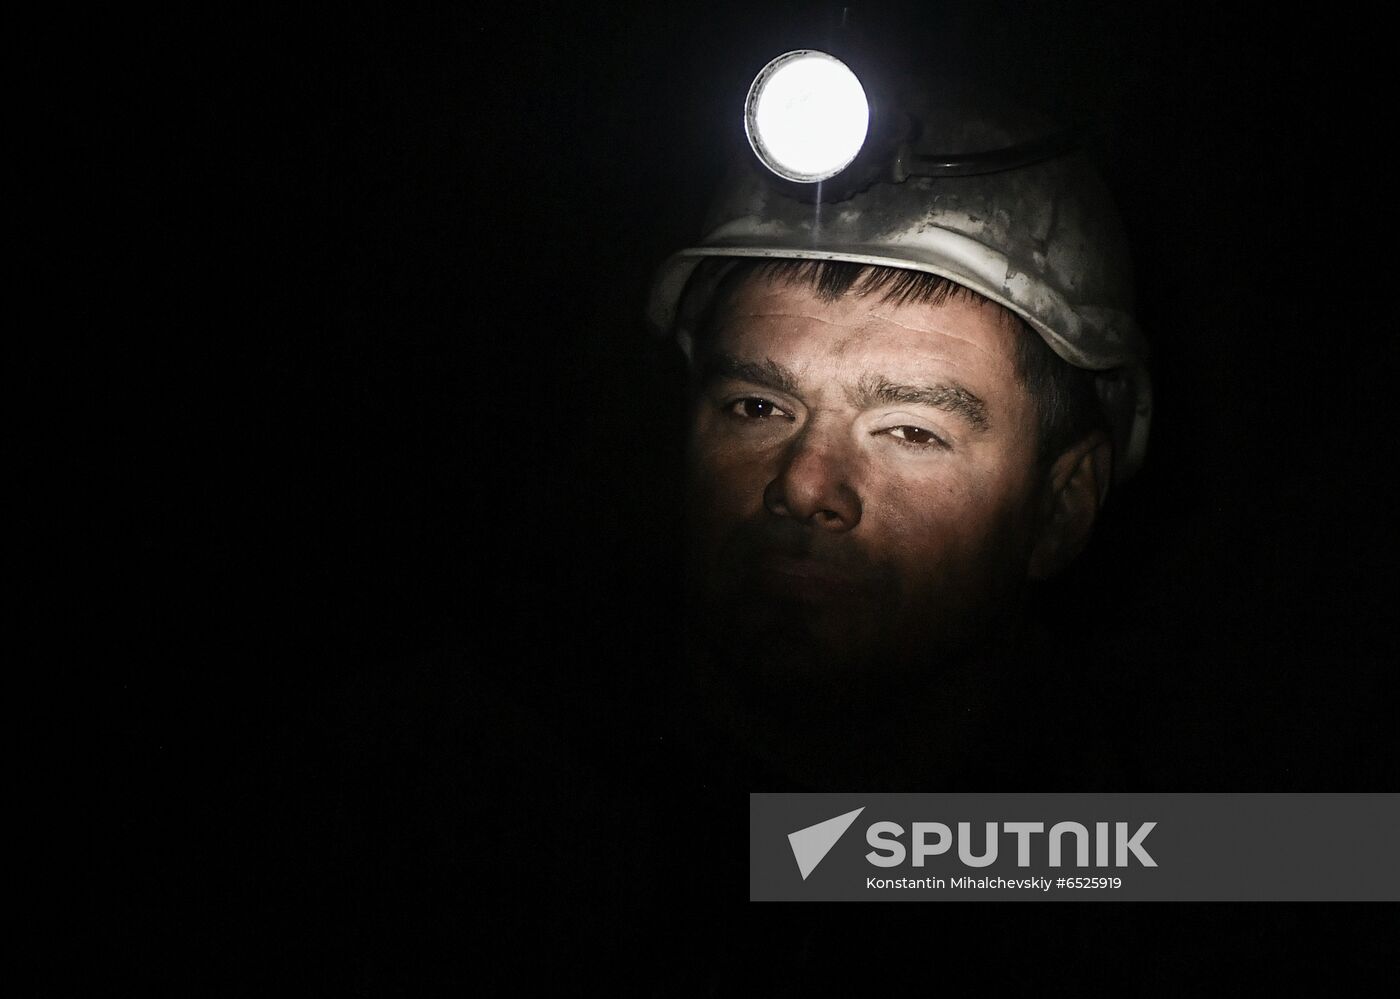 Ukraine Coal Mining